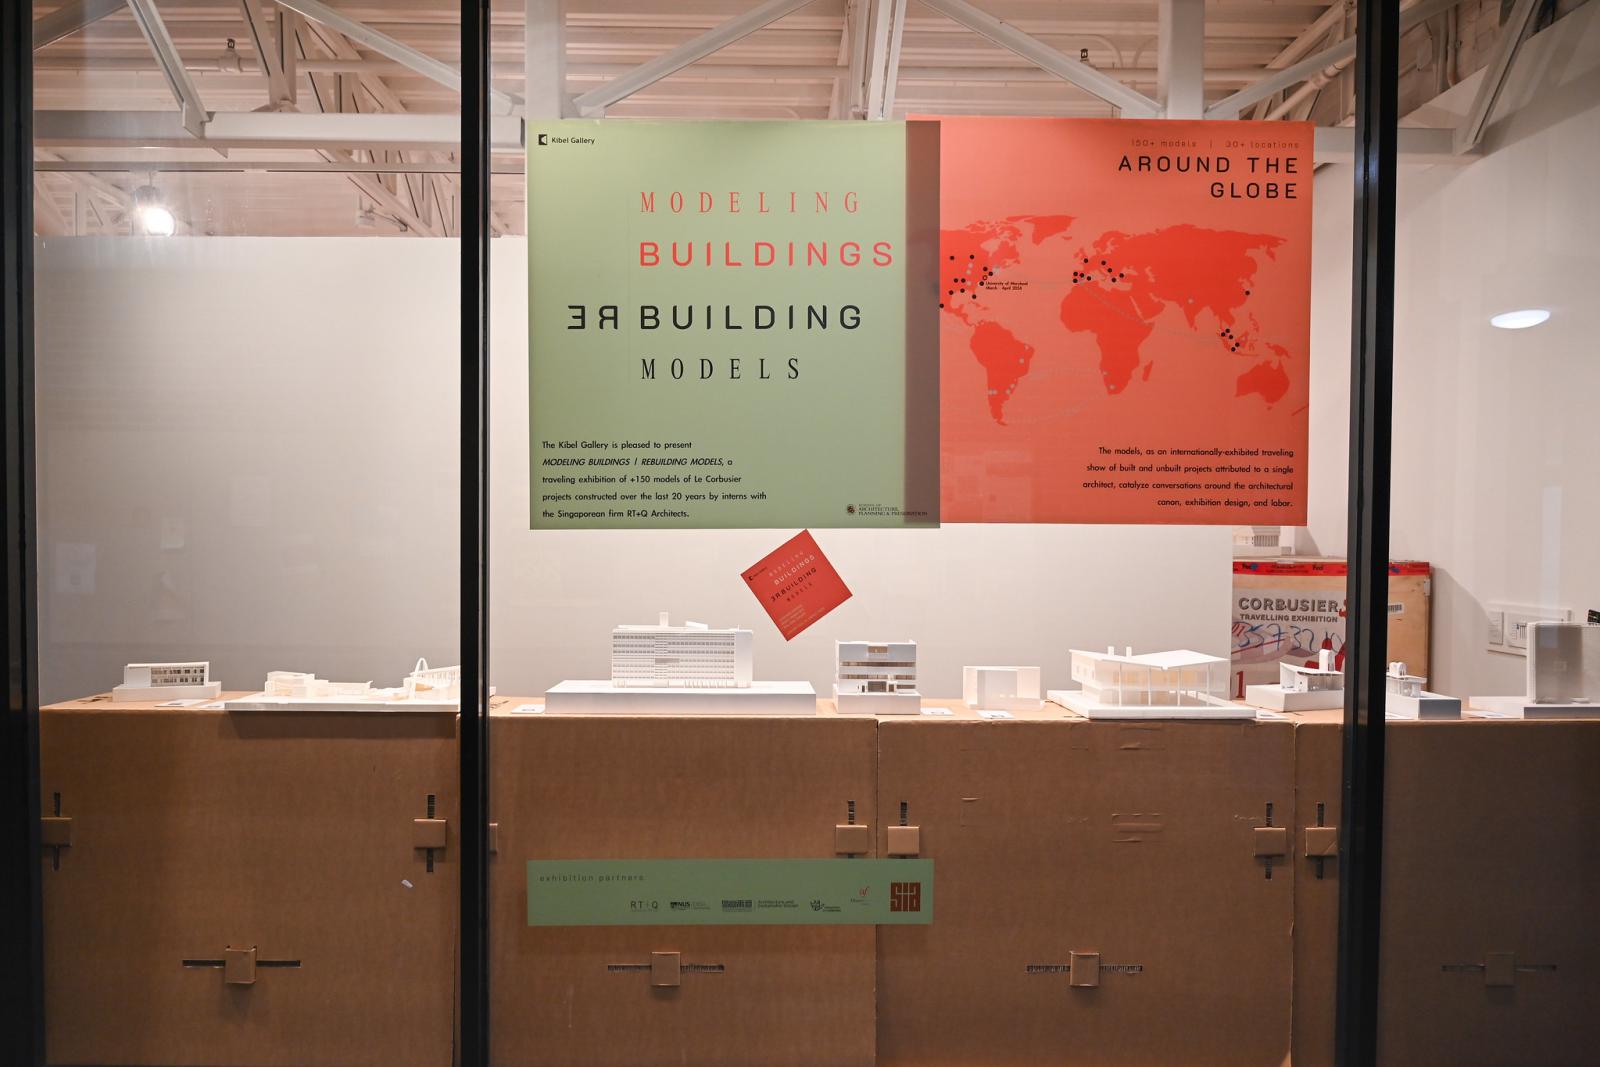 Entrance window to the Kibel Gallery Exhibit on "Modeling Buildings Rebuilding Models"